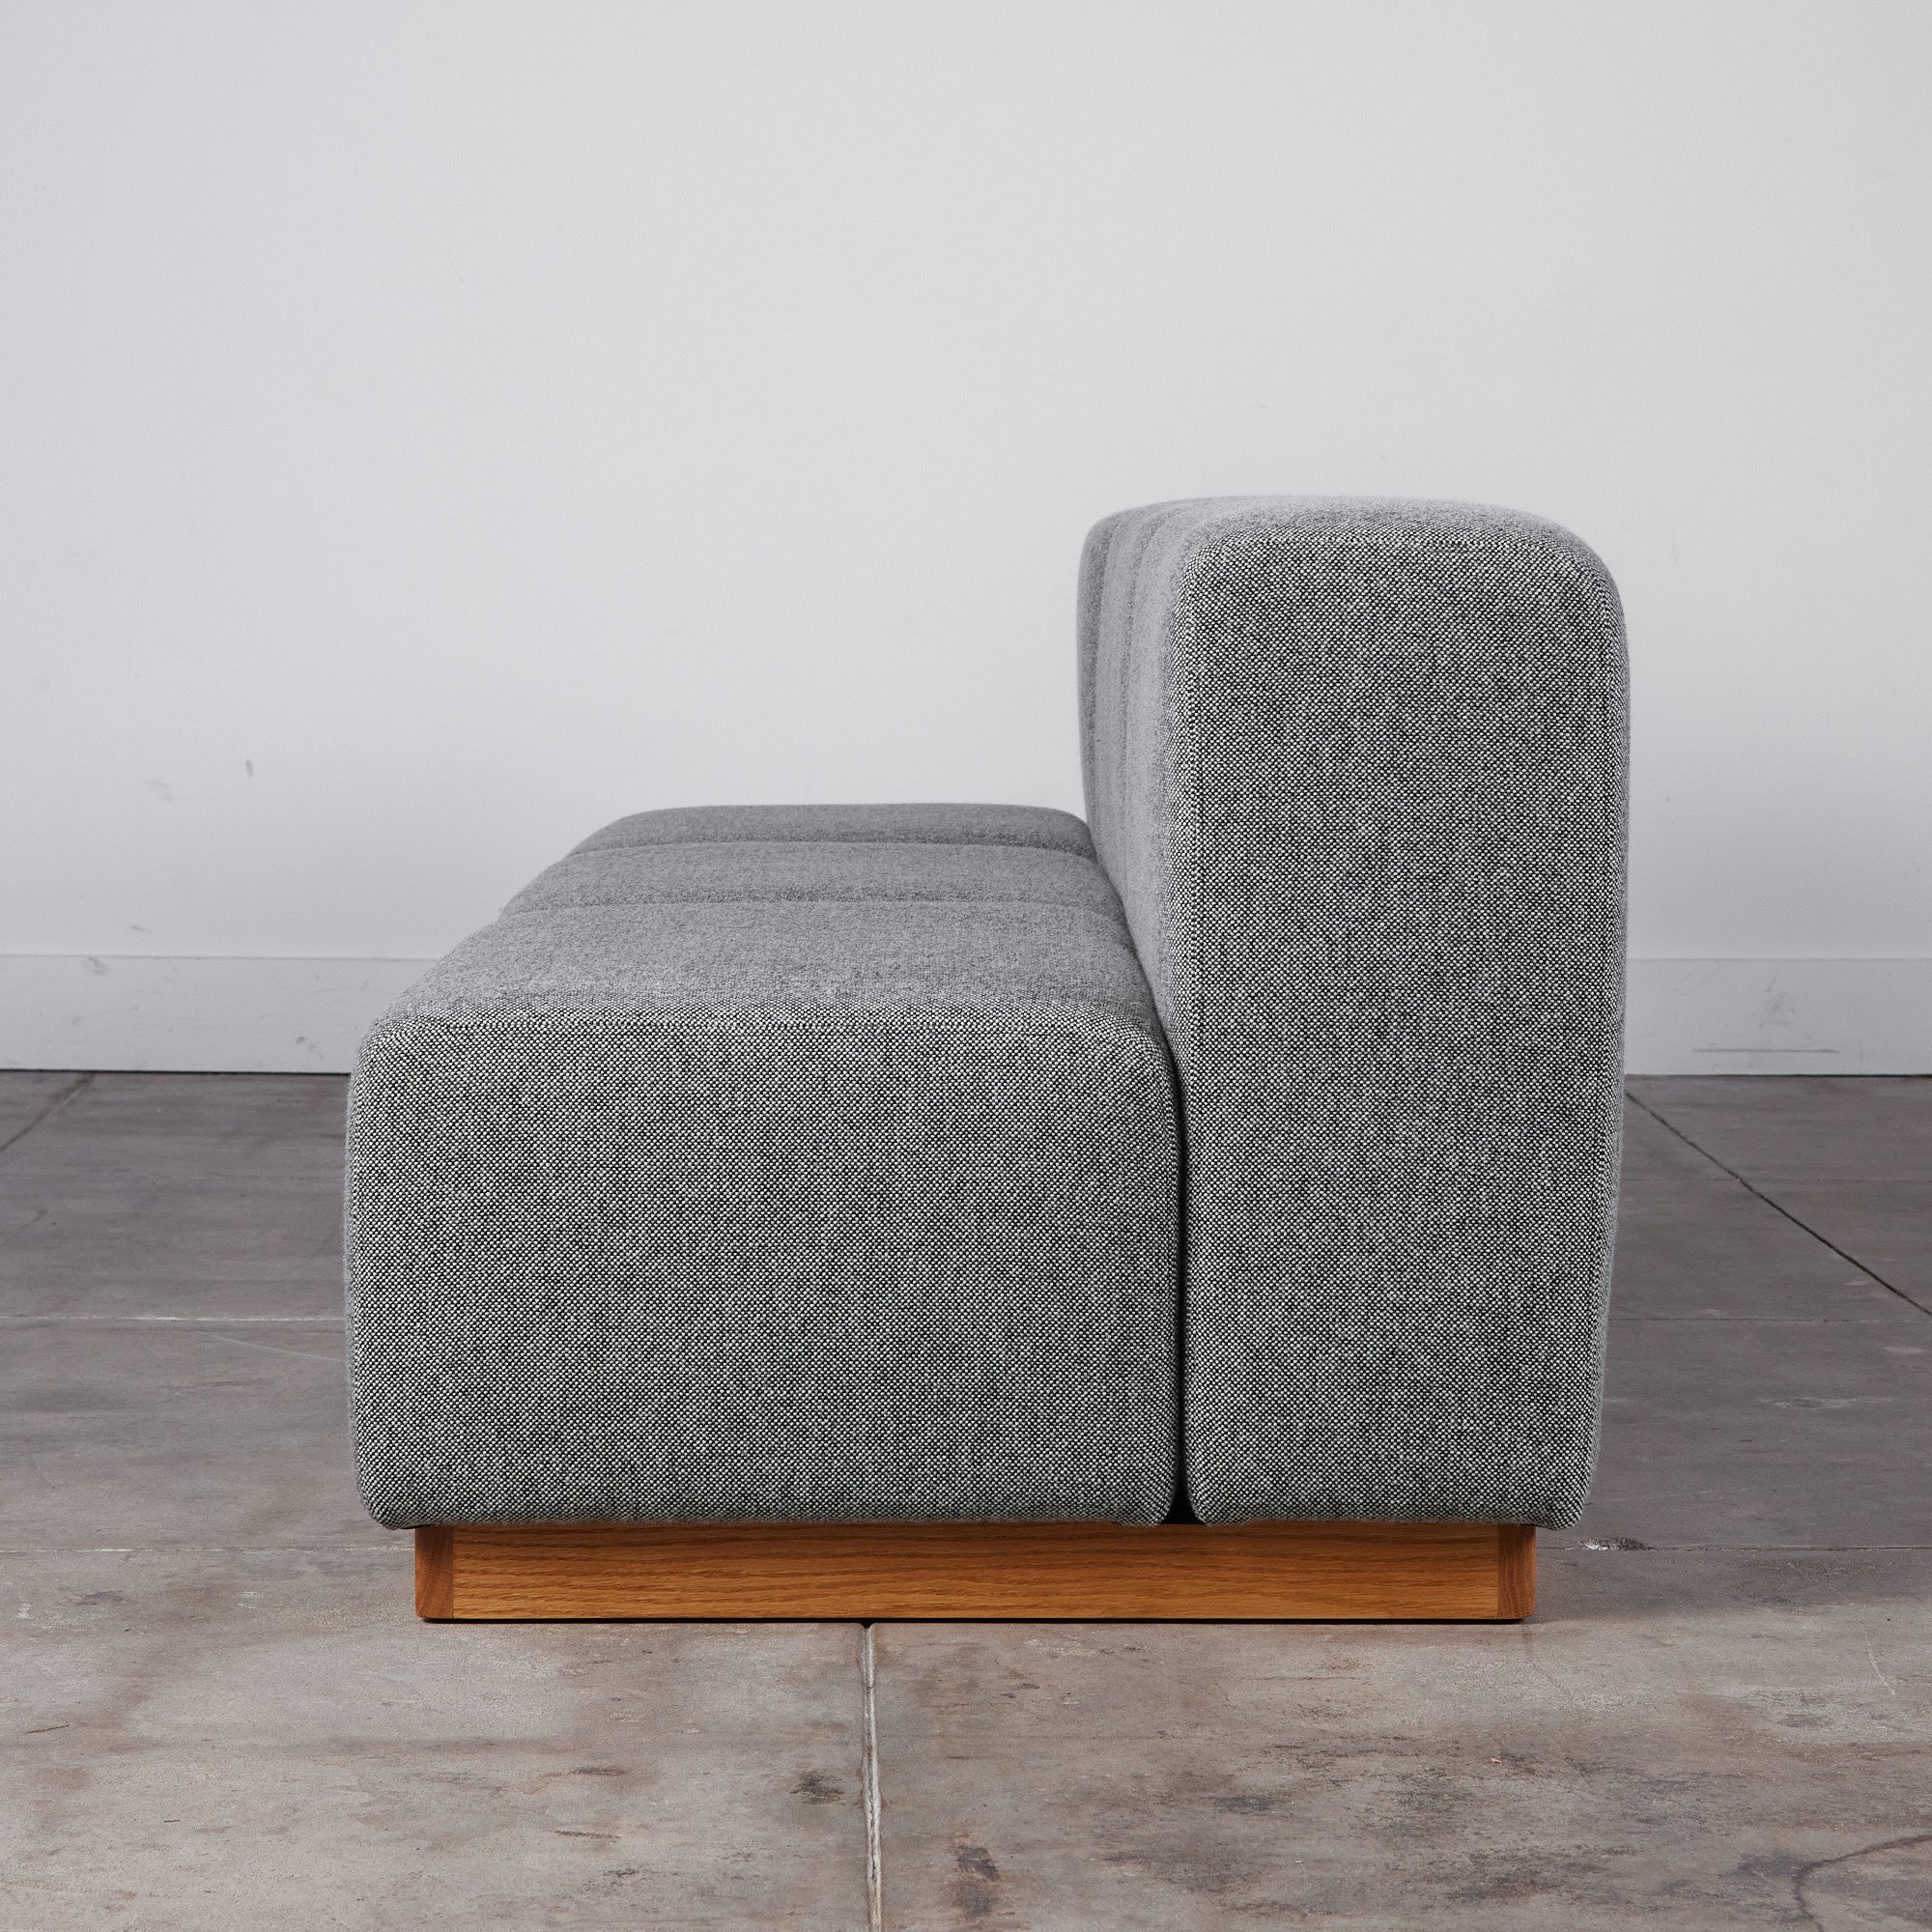 Giancarlo Piretti Style Modern Cubic Three Seater Sofa